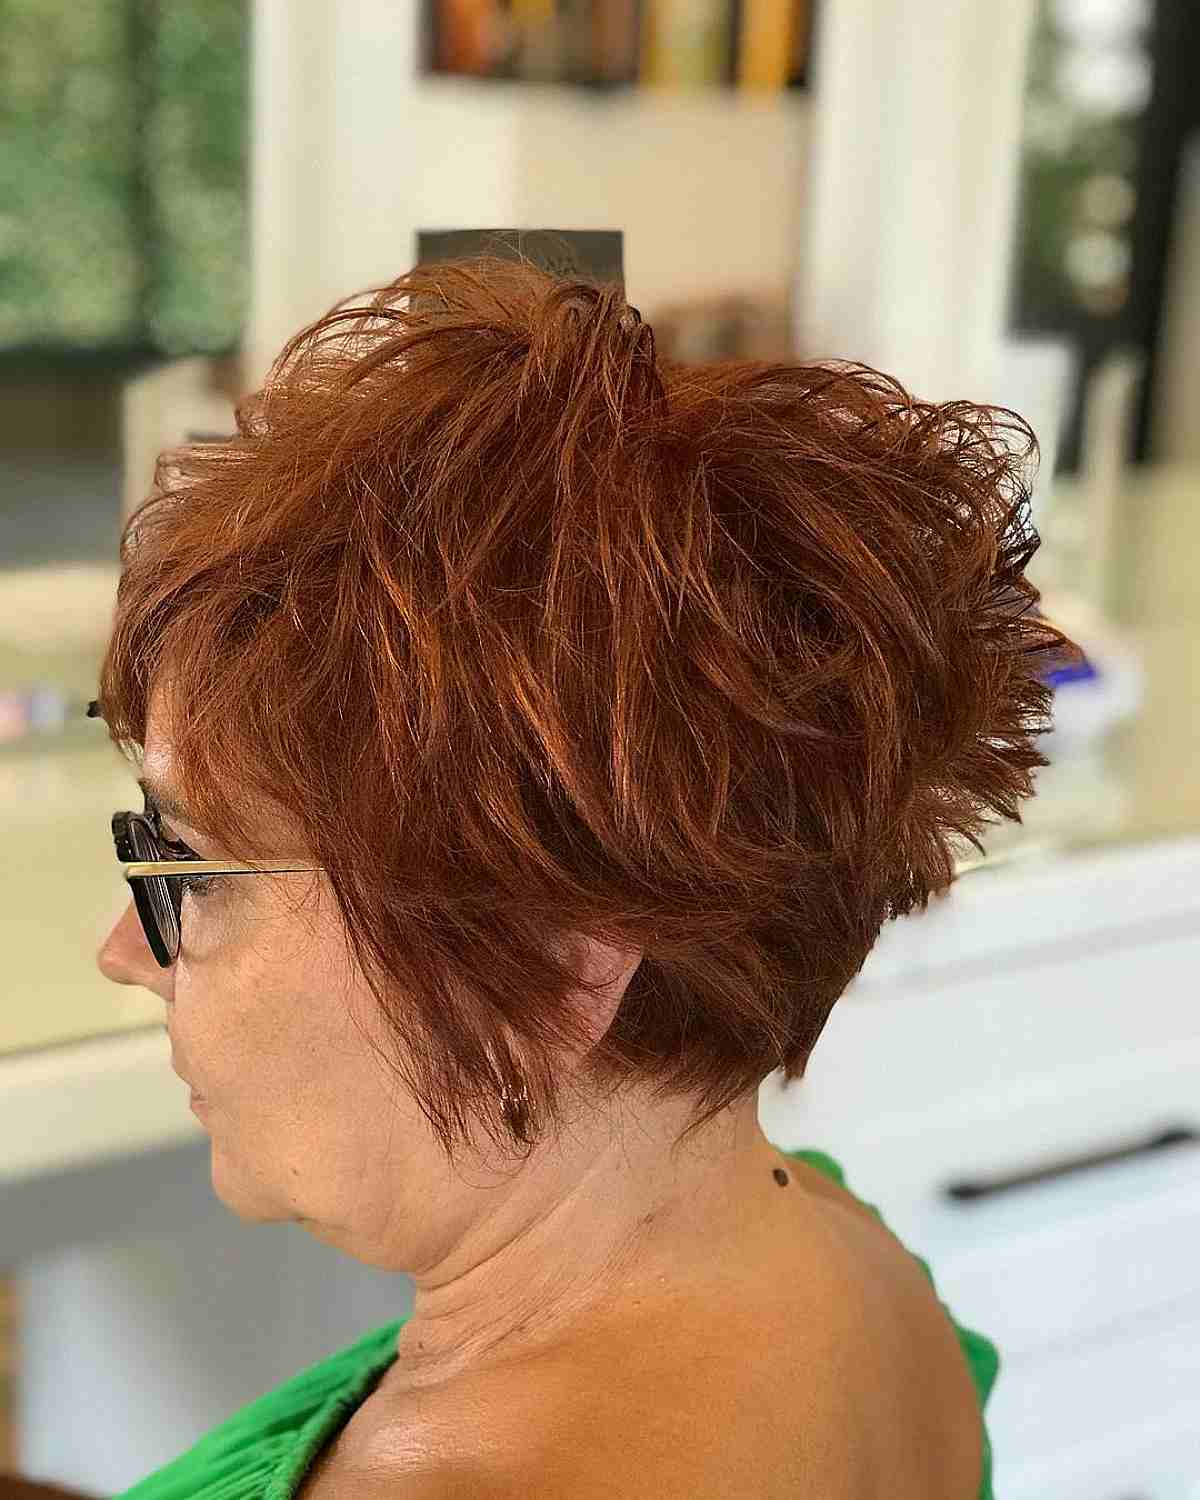 Short Messy Haircut with Side-Swept Fringe for Older Women